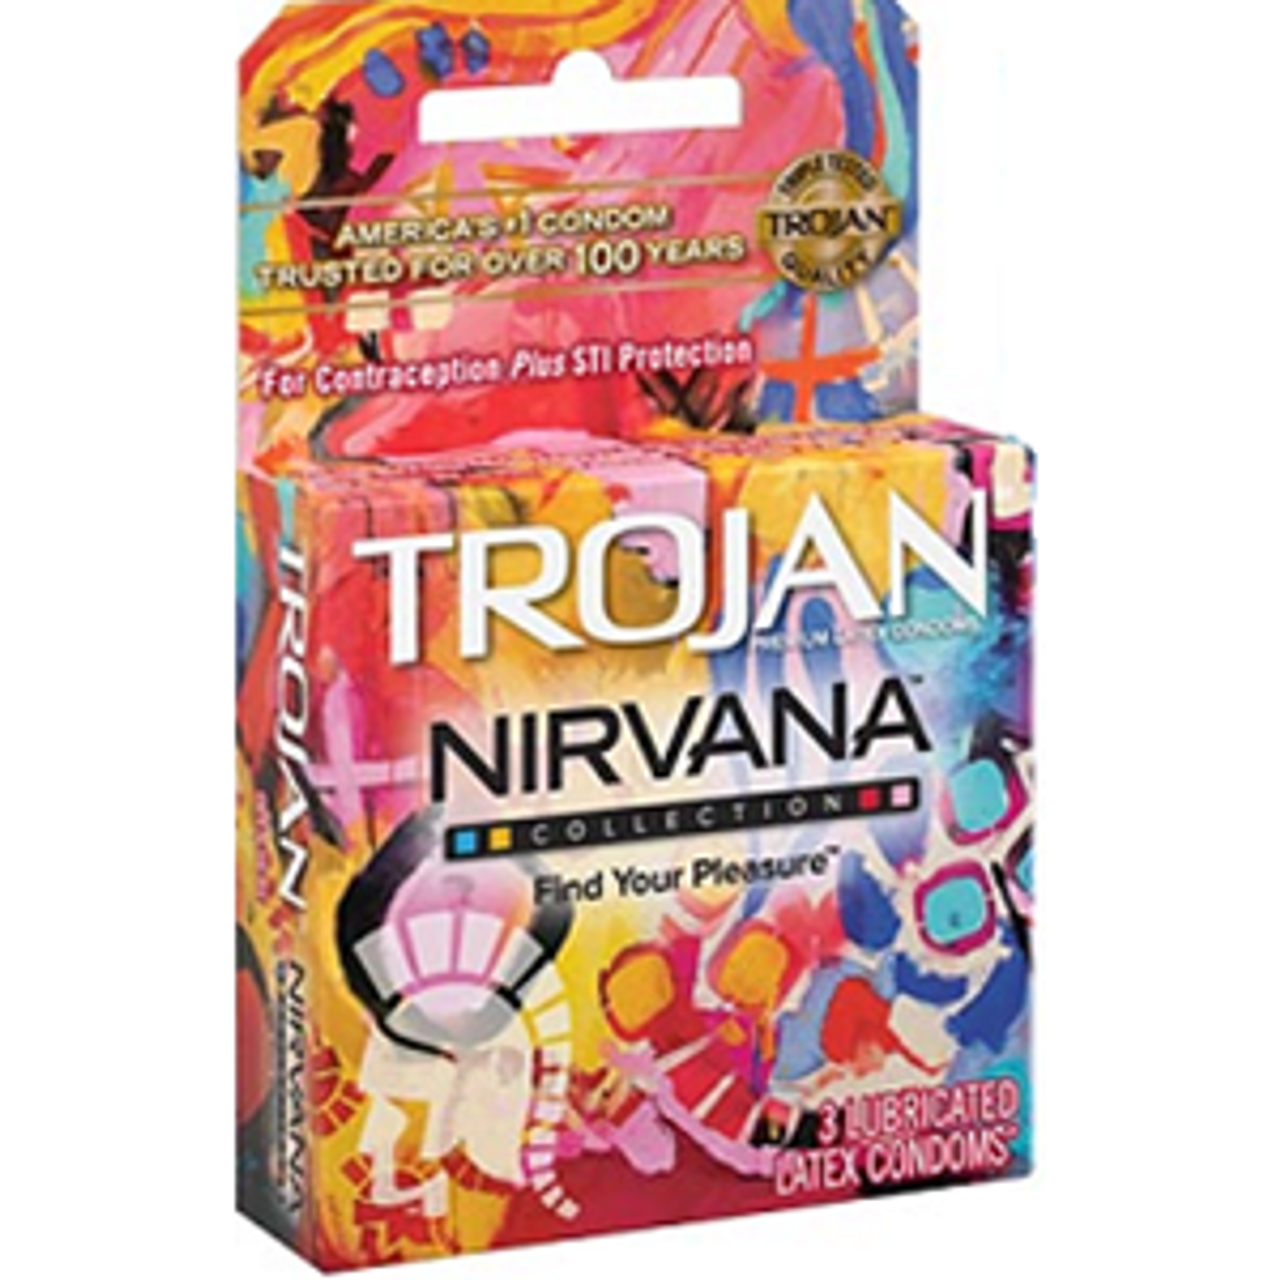 Trojan Nirvana Condoms in 3ct. box of 6